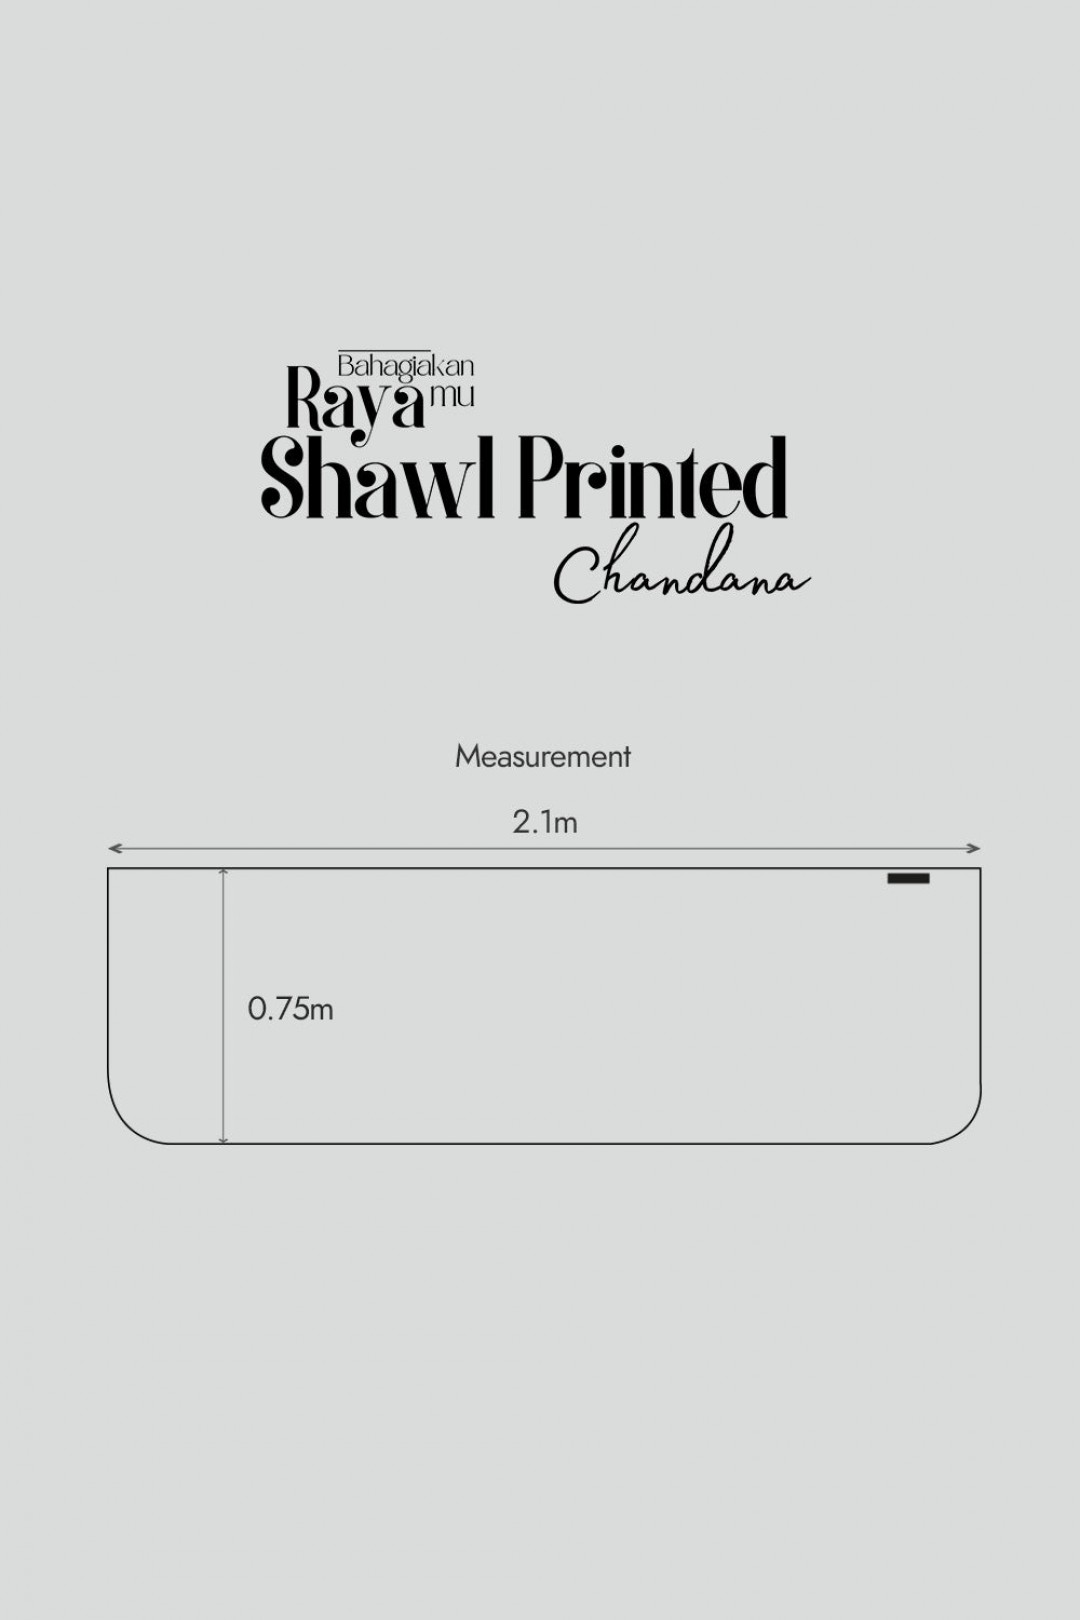 Long Shawl Printed Chandana Tea Leaf